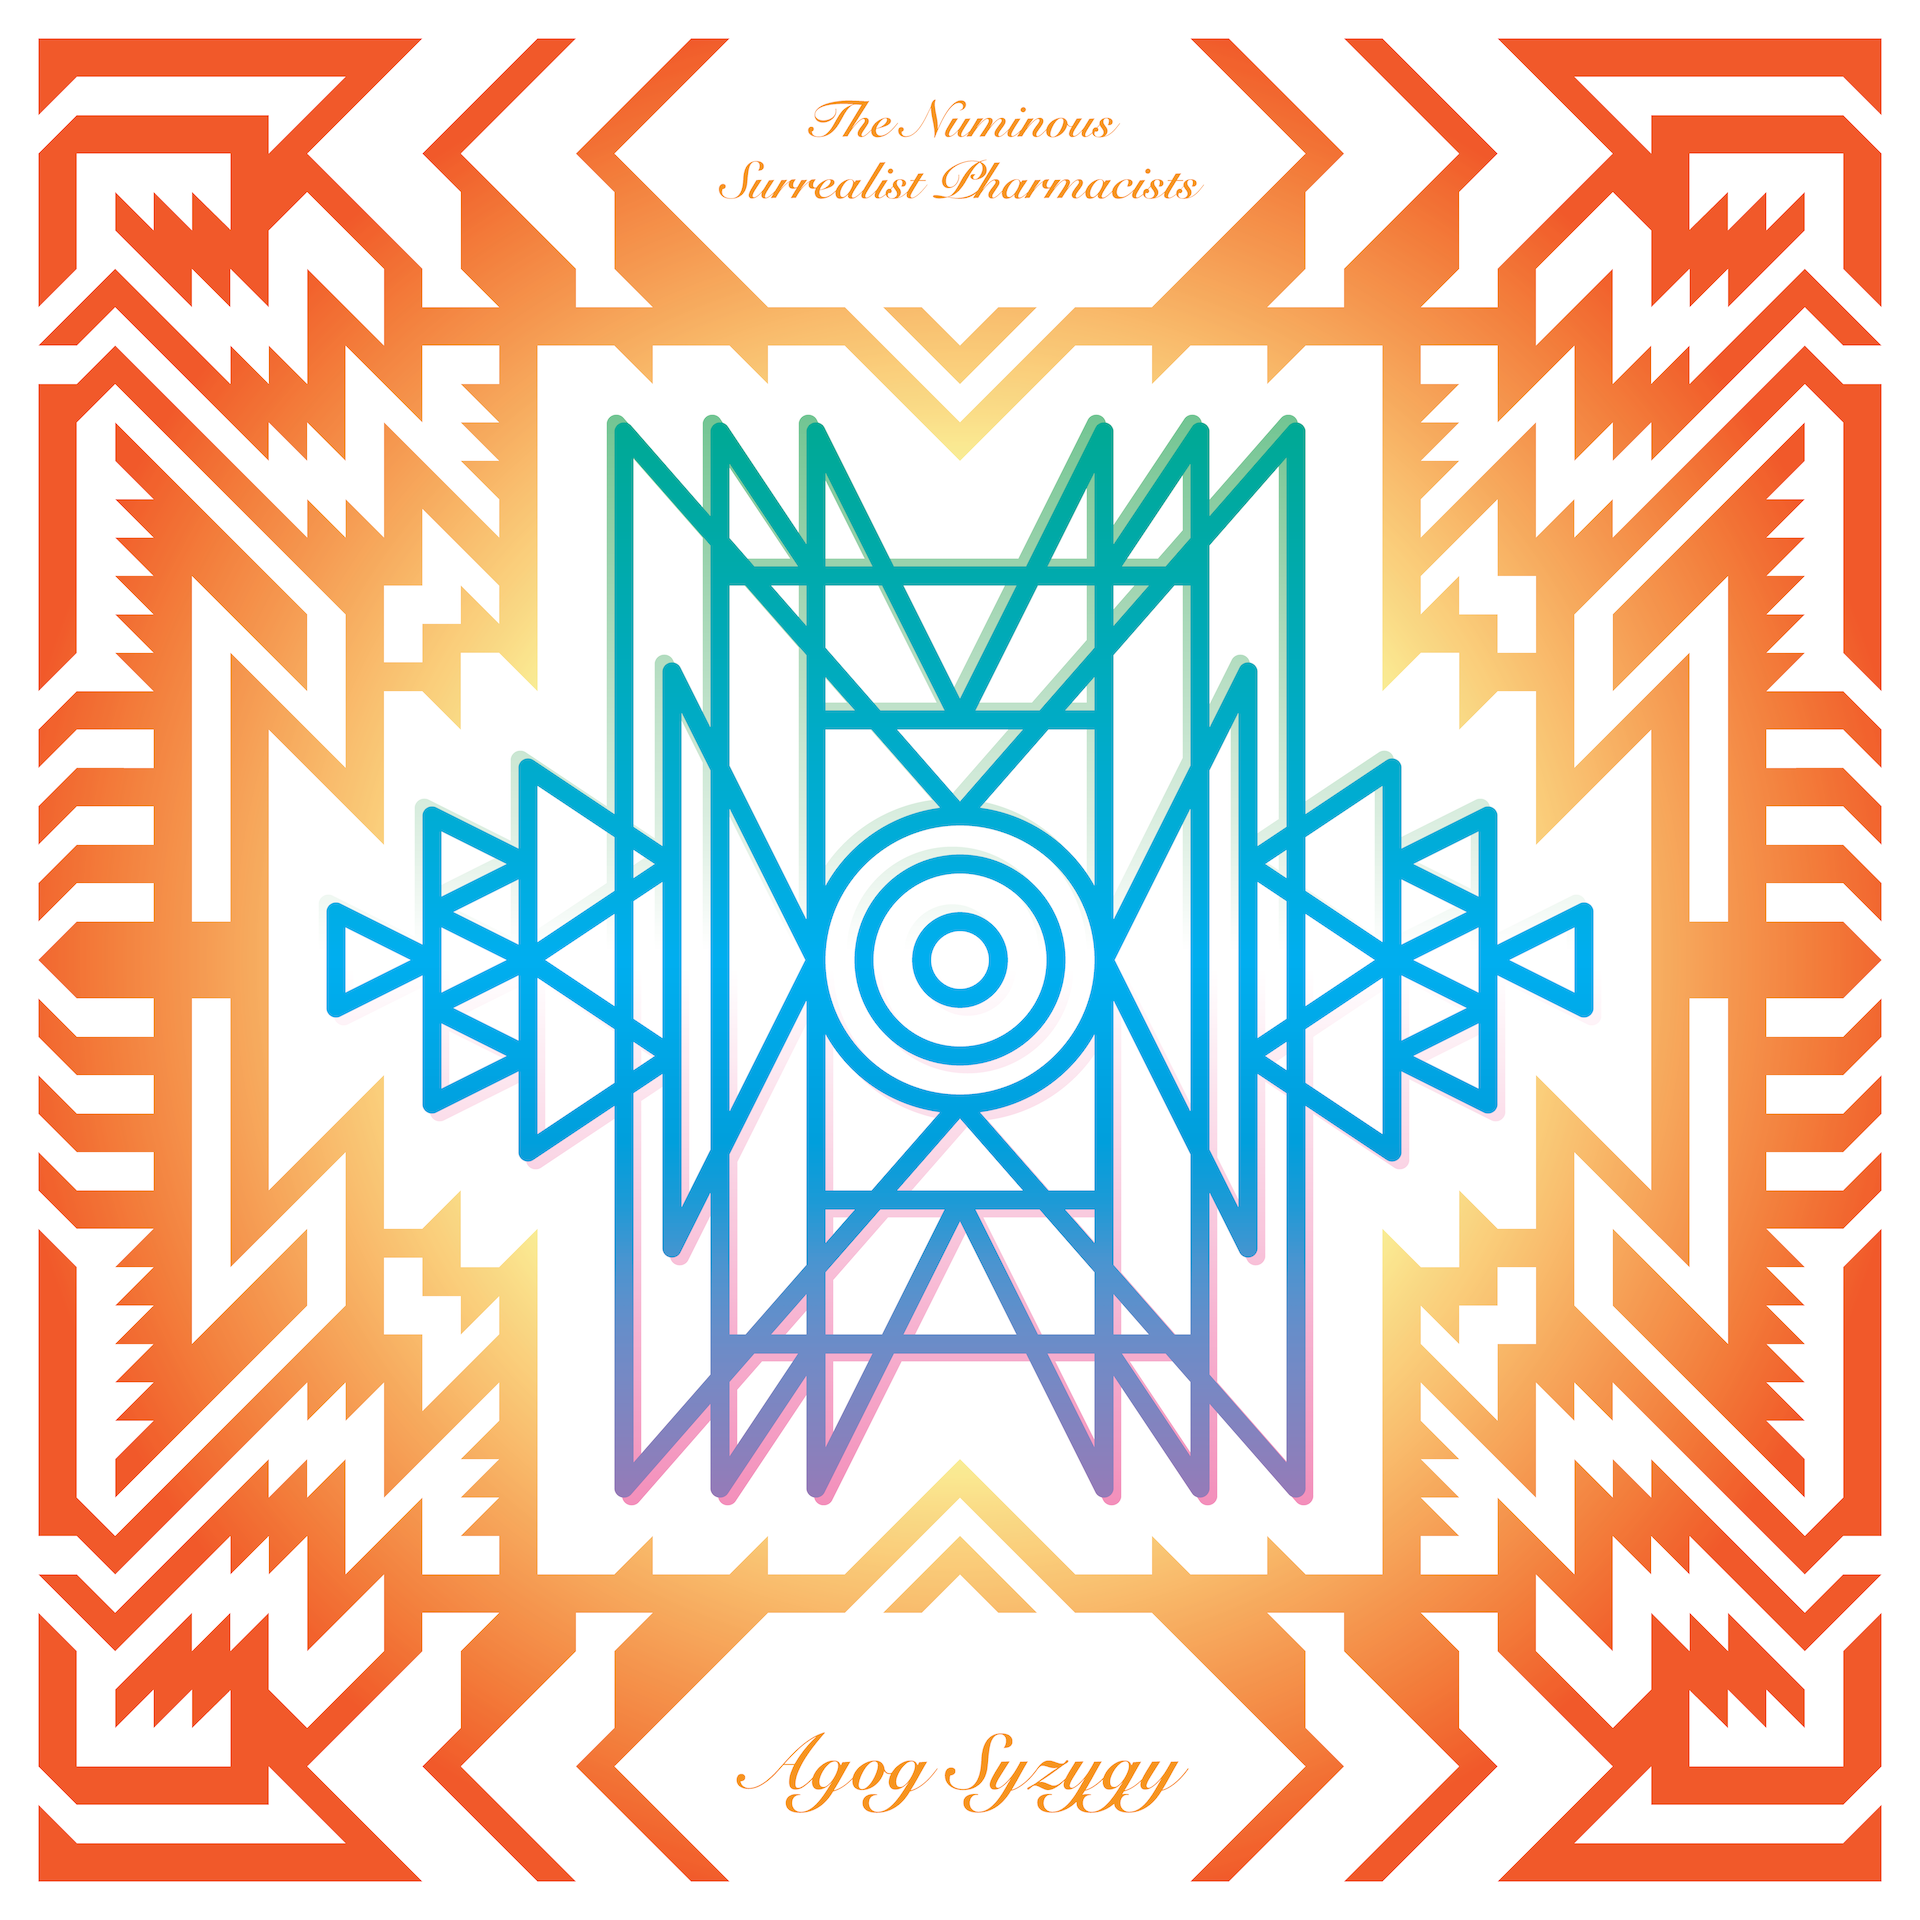 Agog Syzygy - Concept Album Cover